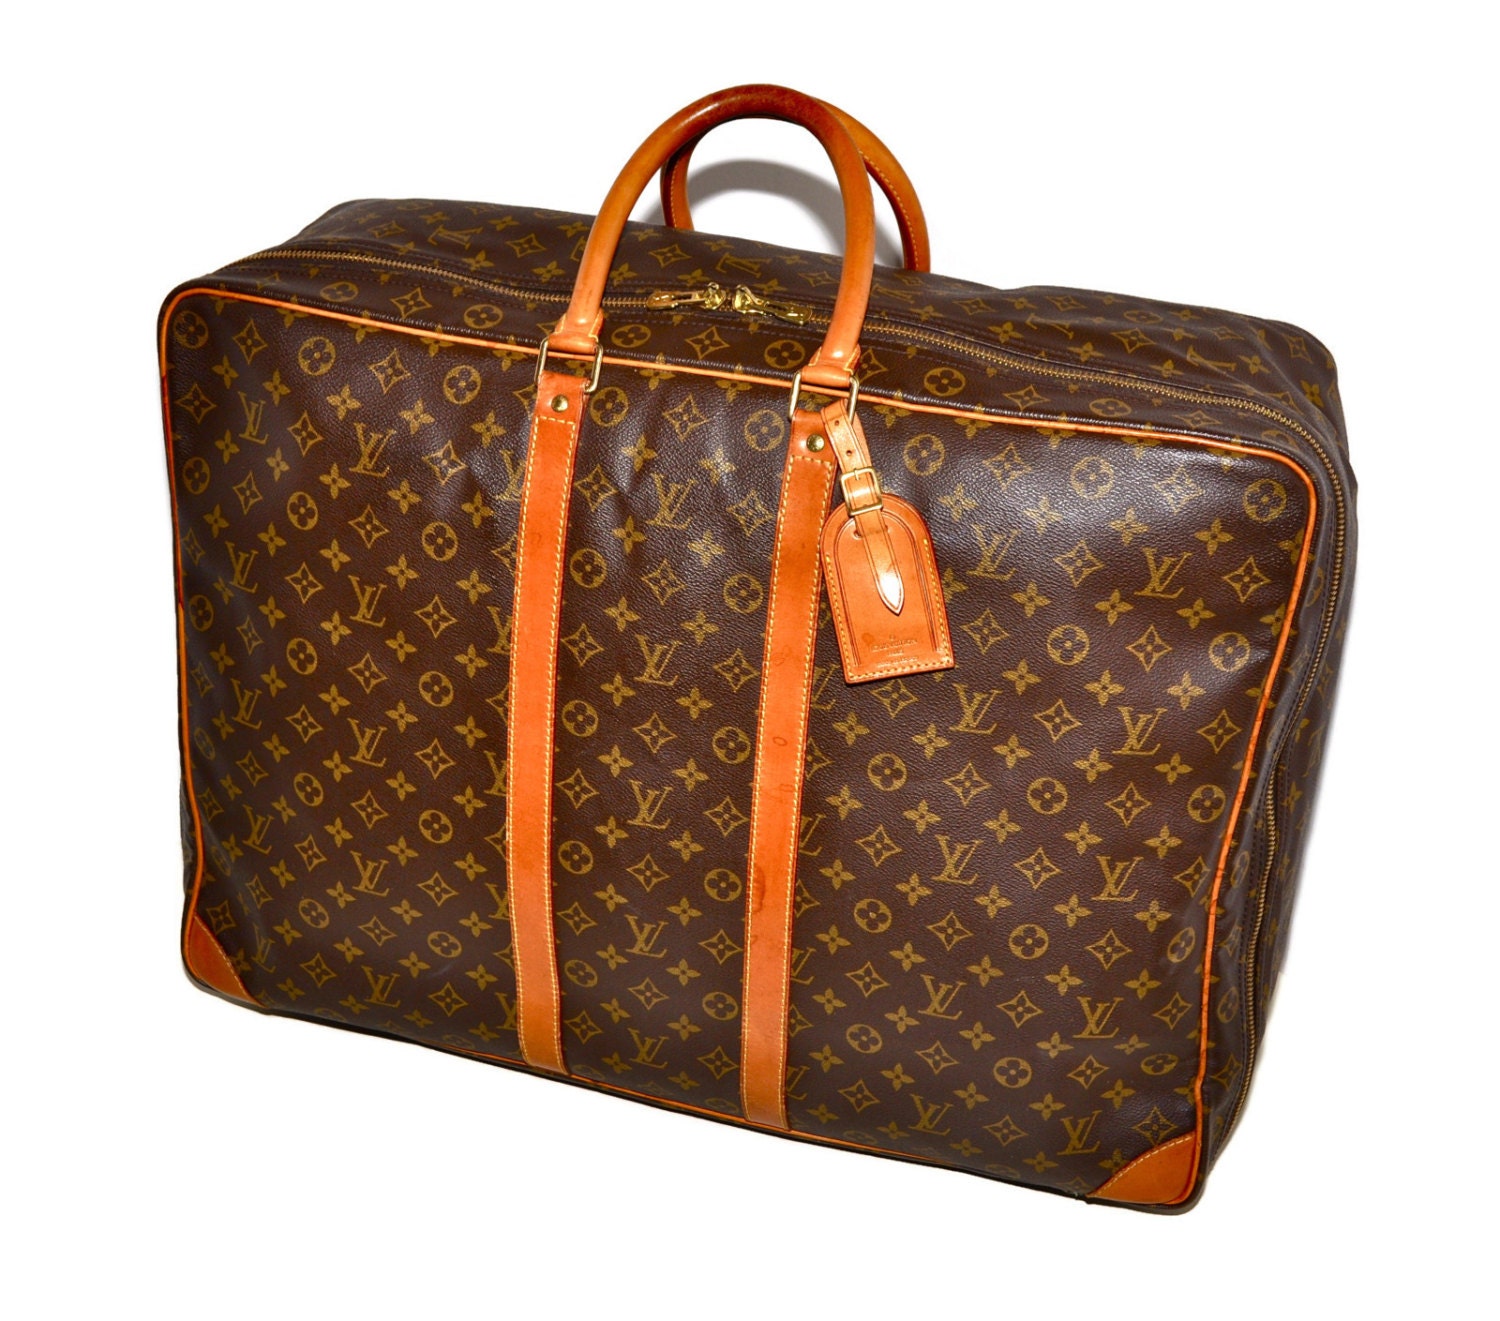 LOUIS VUITTON Sirius 60 Suitcase Large Size Luggage Keepall